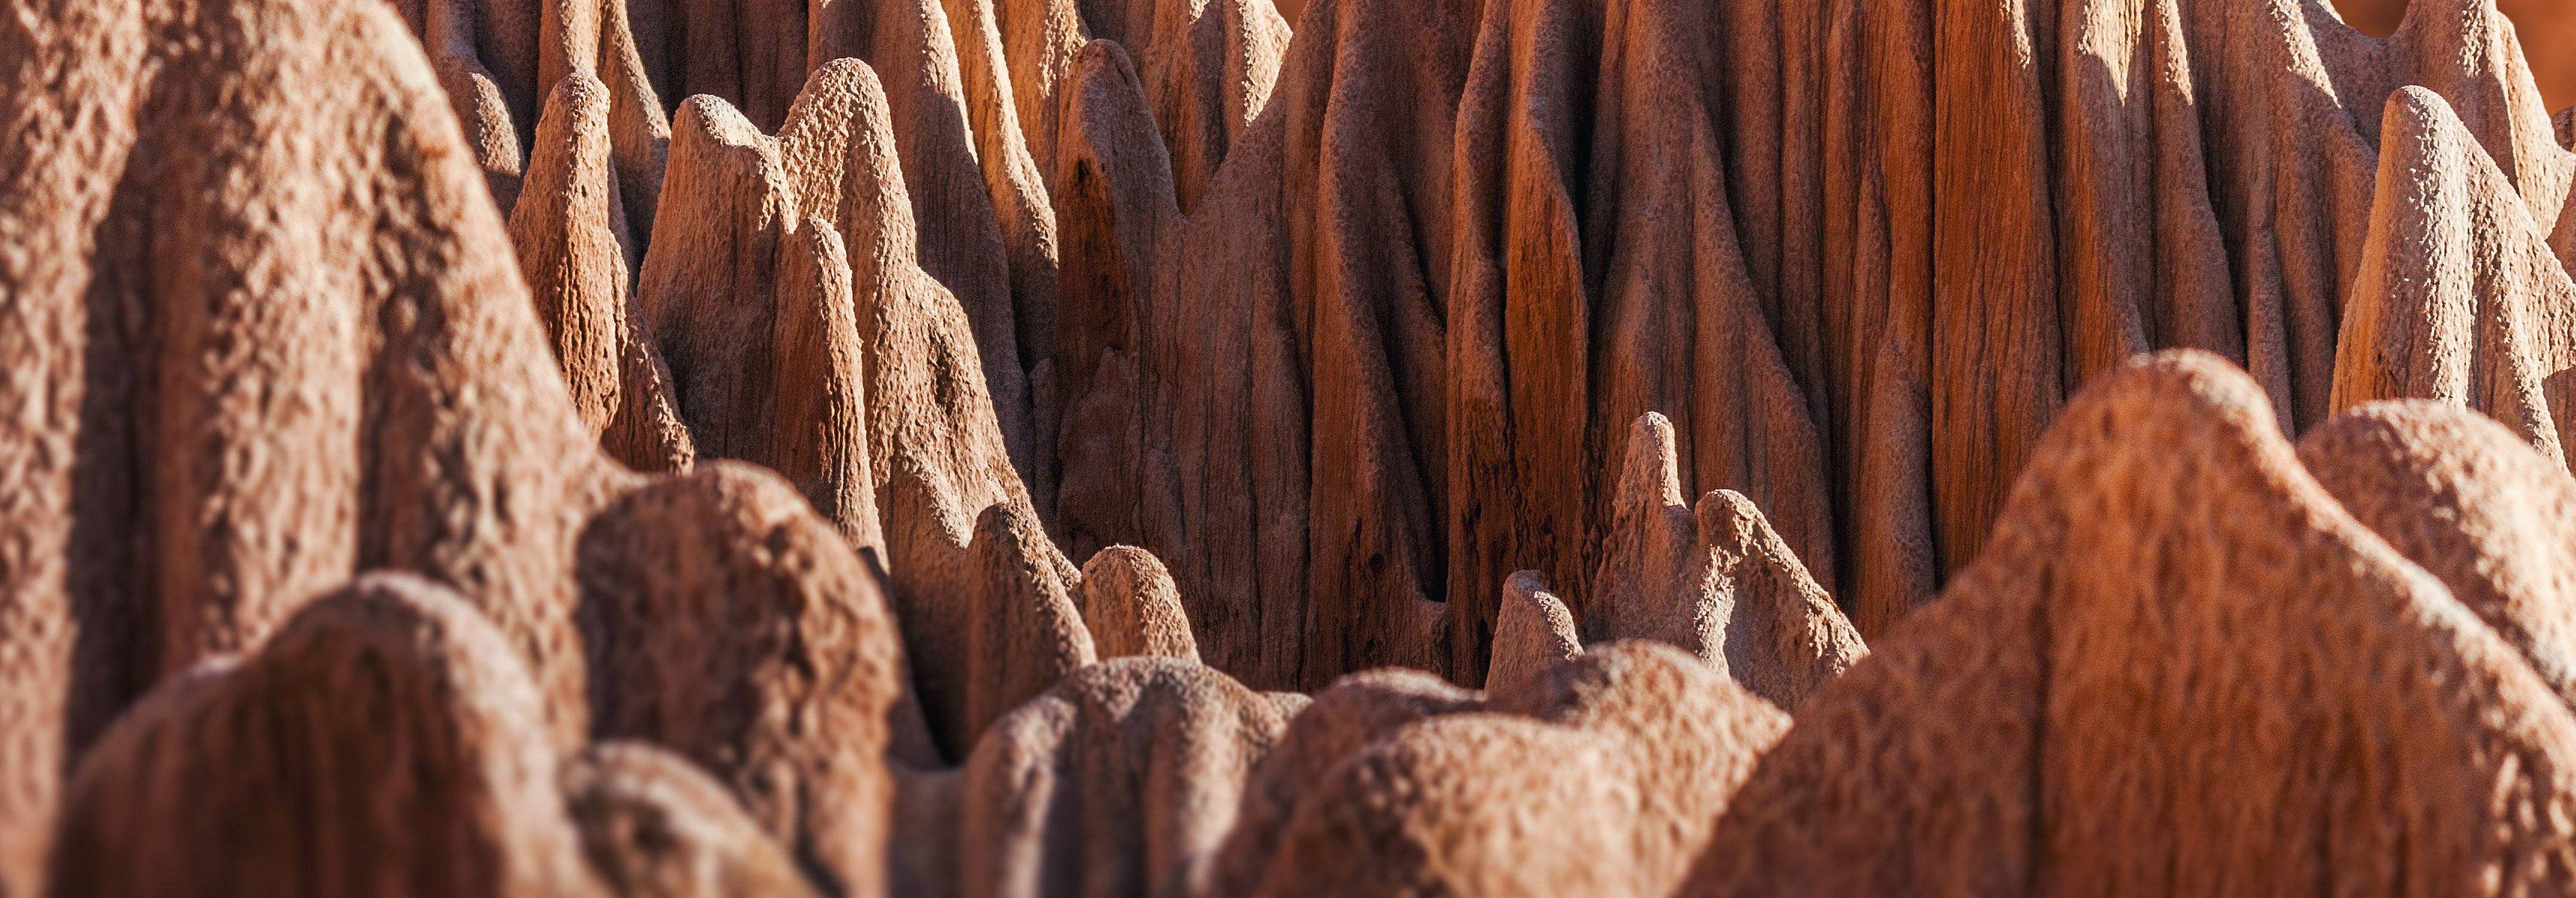 The Red tsingy of Antsiranana, Madagascar. Natural karsts ma